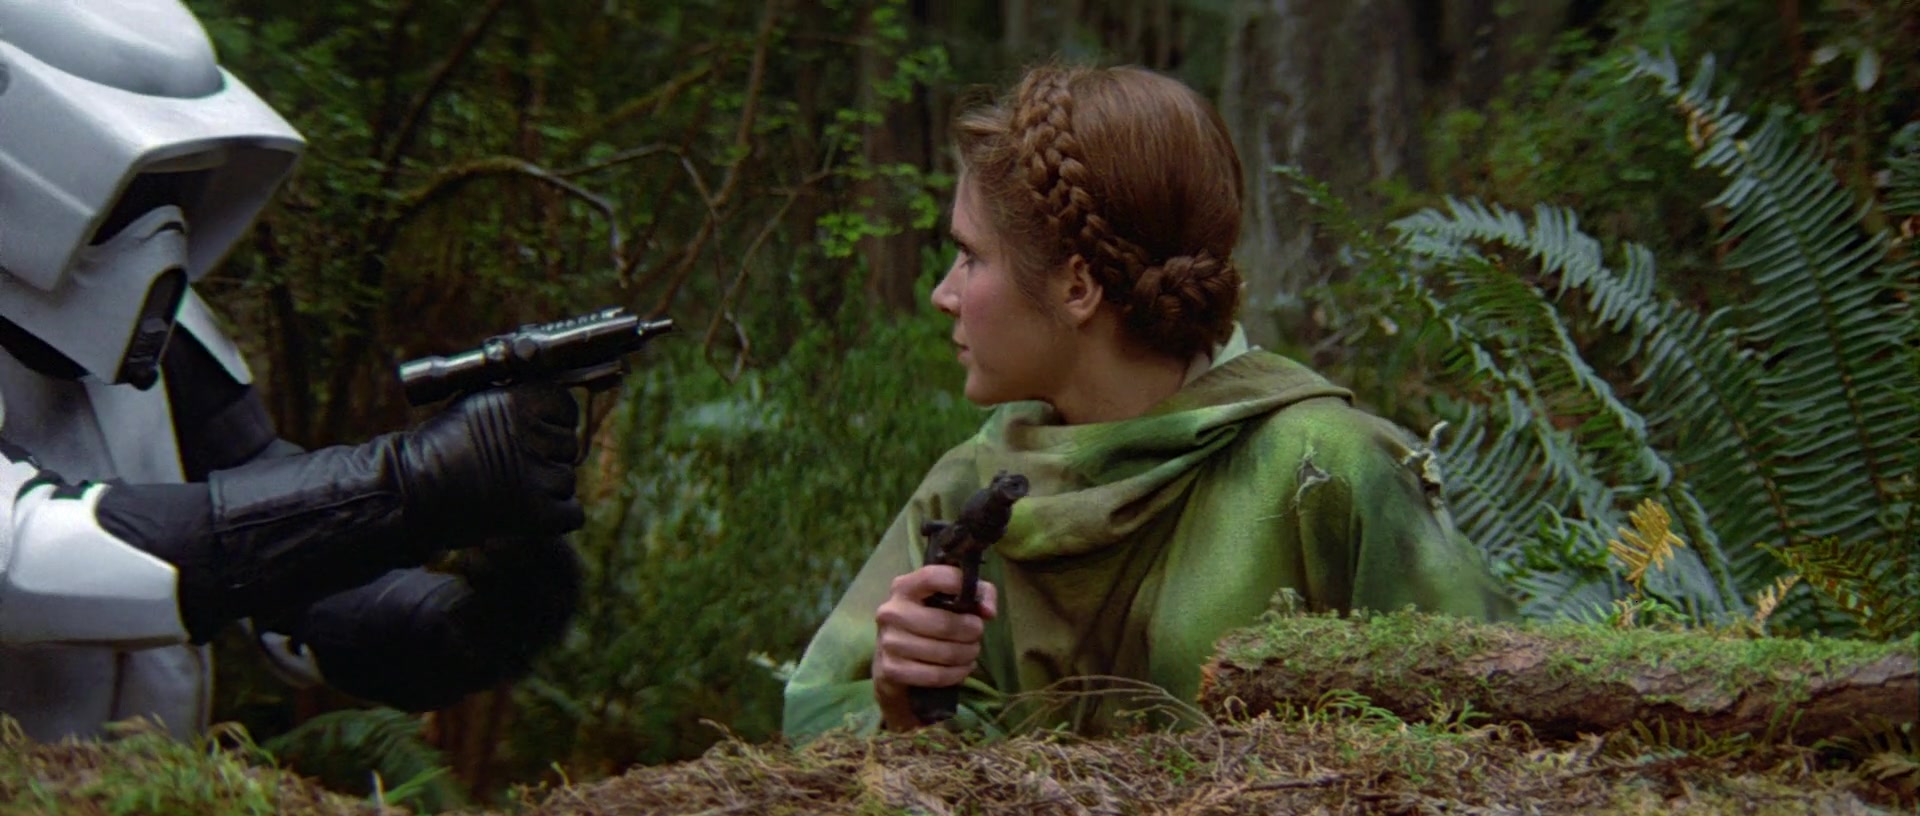 Star Wars Episode VI: Star Wars Return of the Jedi (1983) 